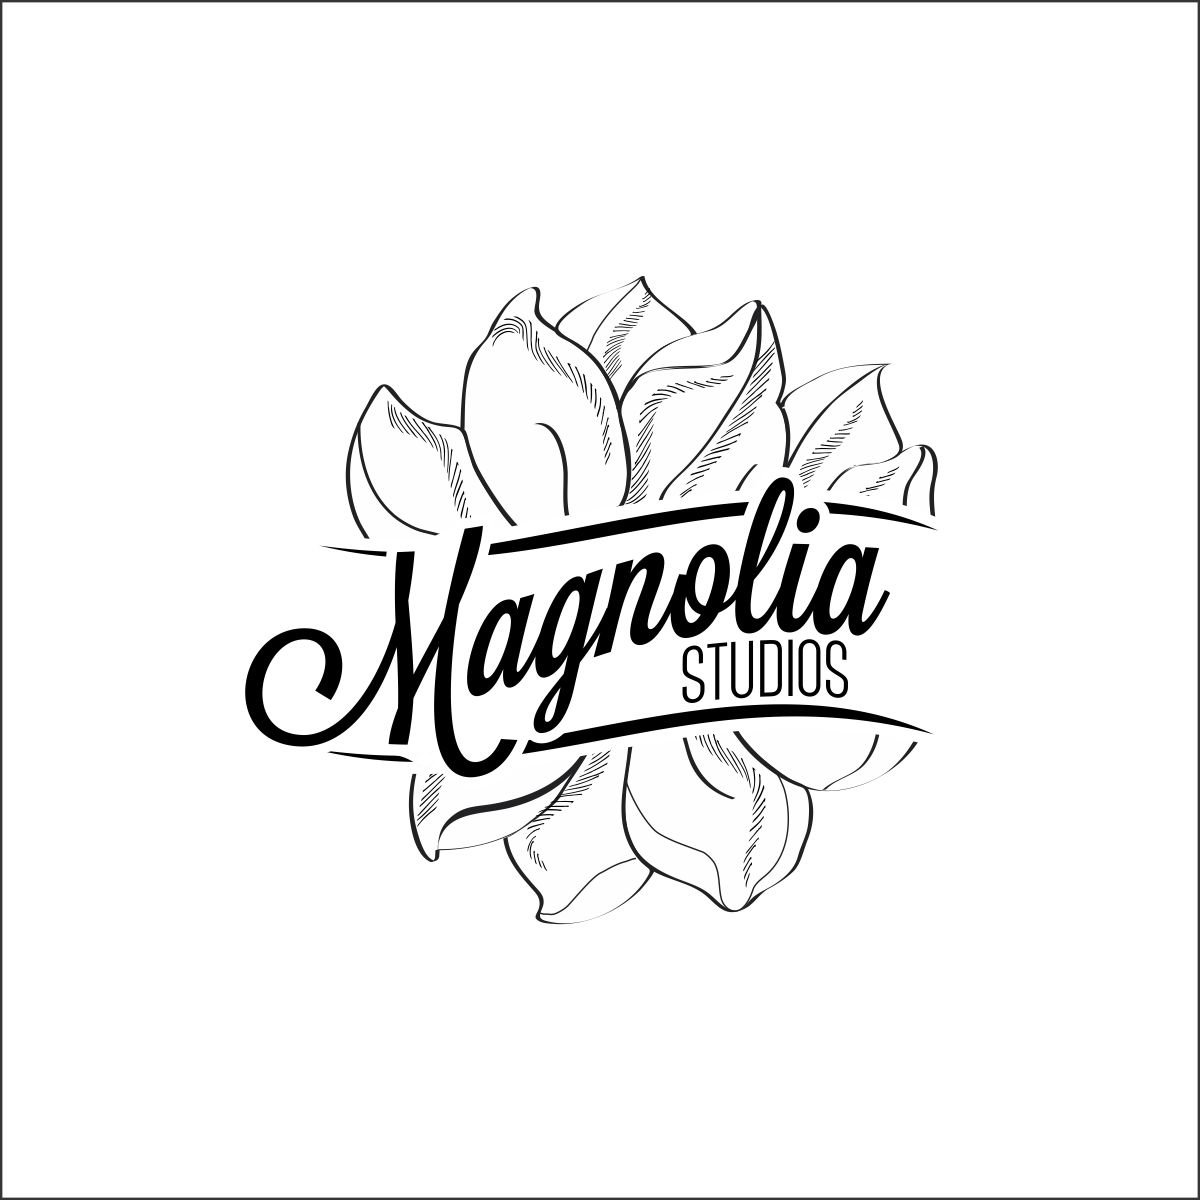 MagnoliaStudiosLogoForLydiaBrewer.jpg